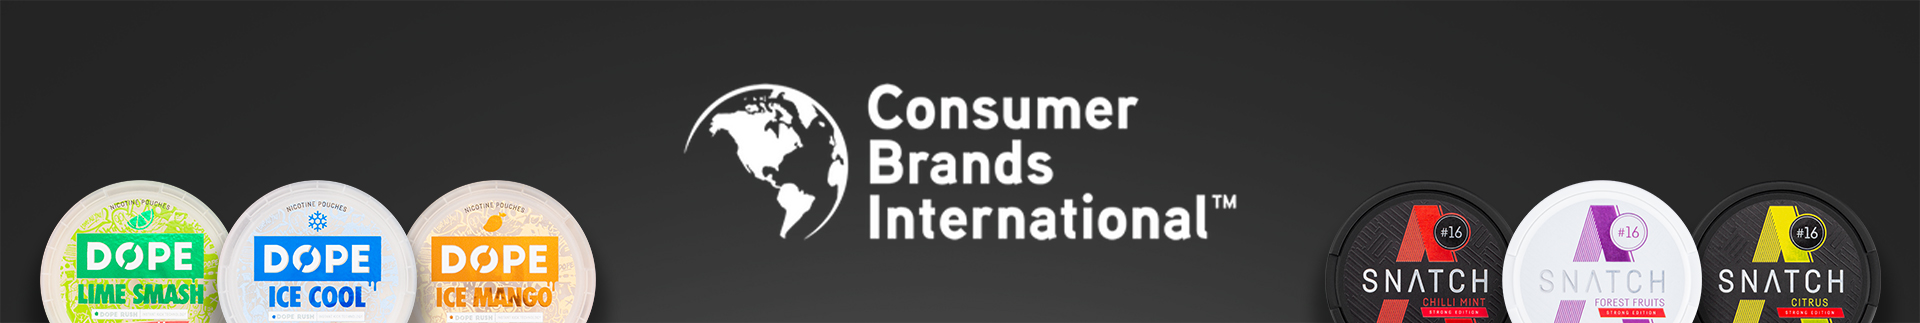 Consumer Brands International